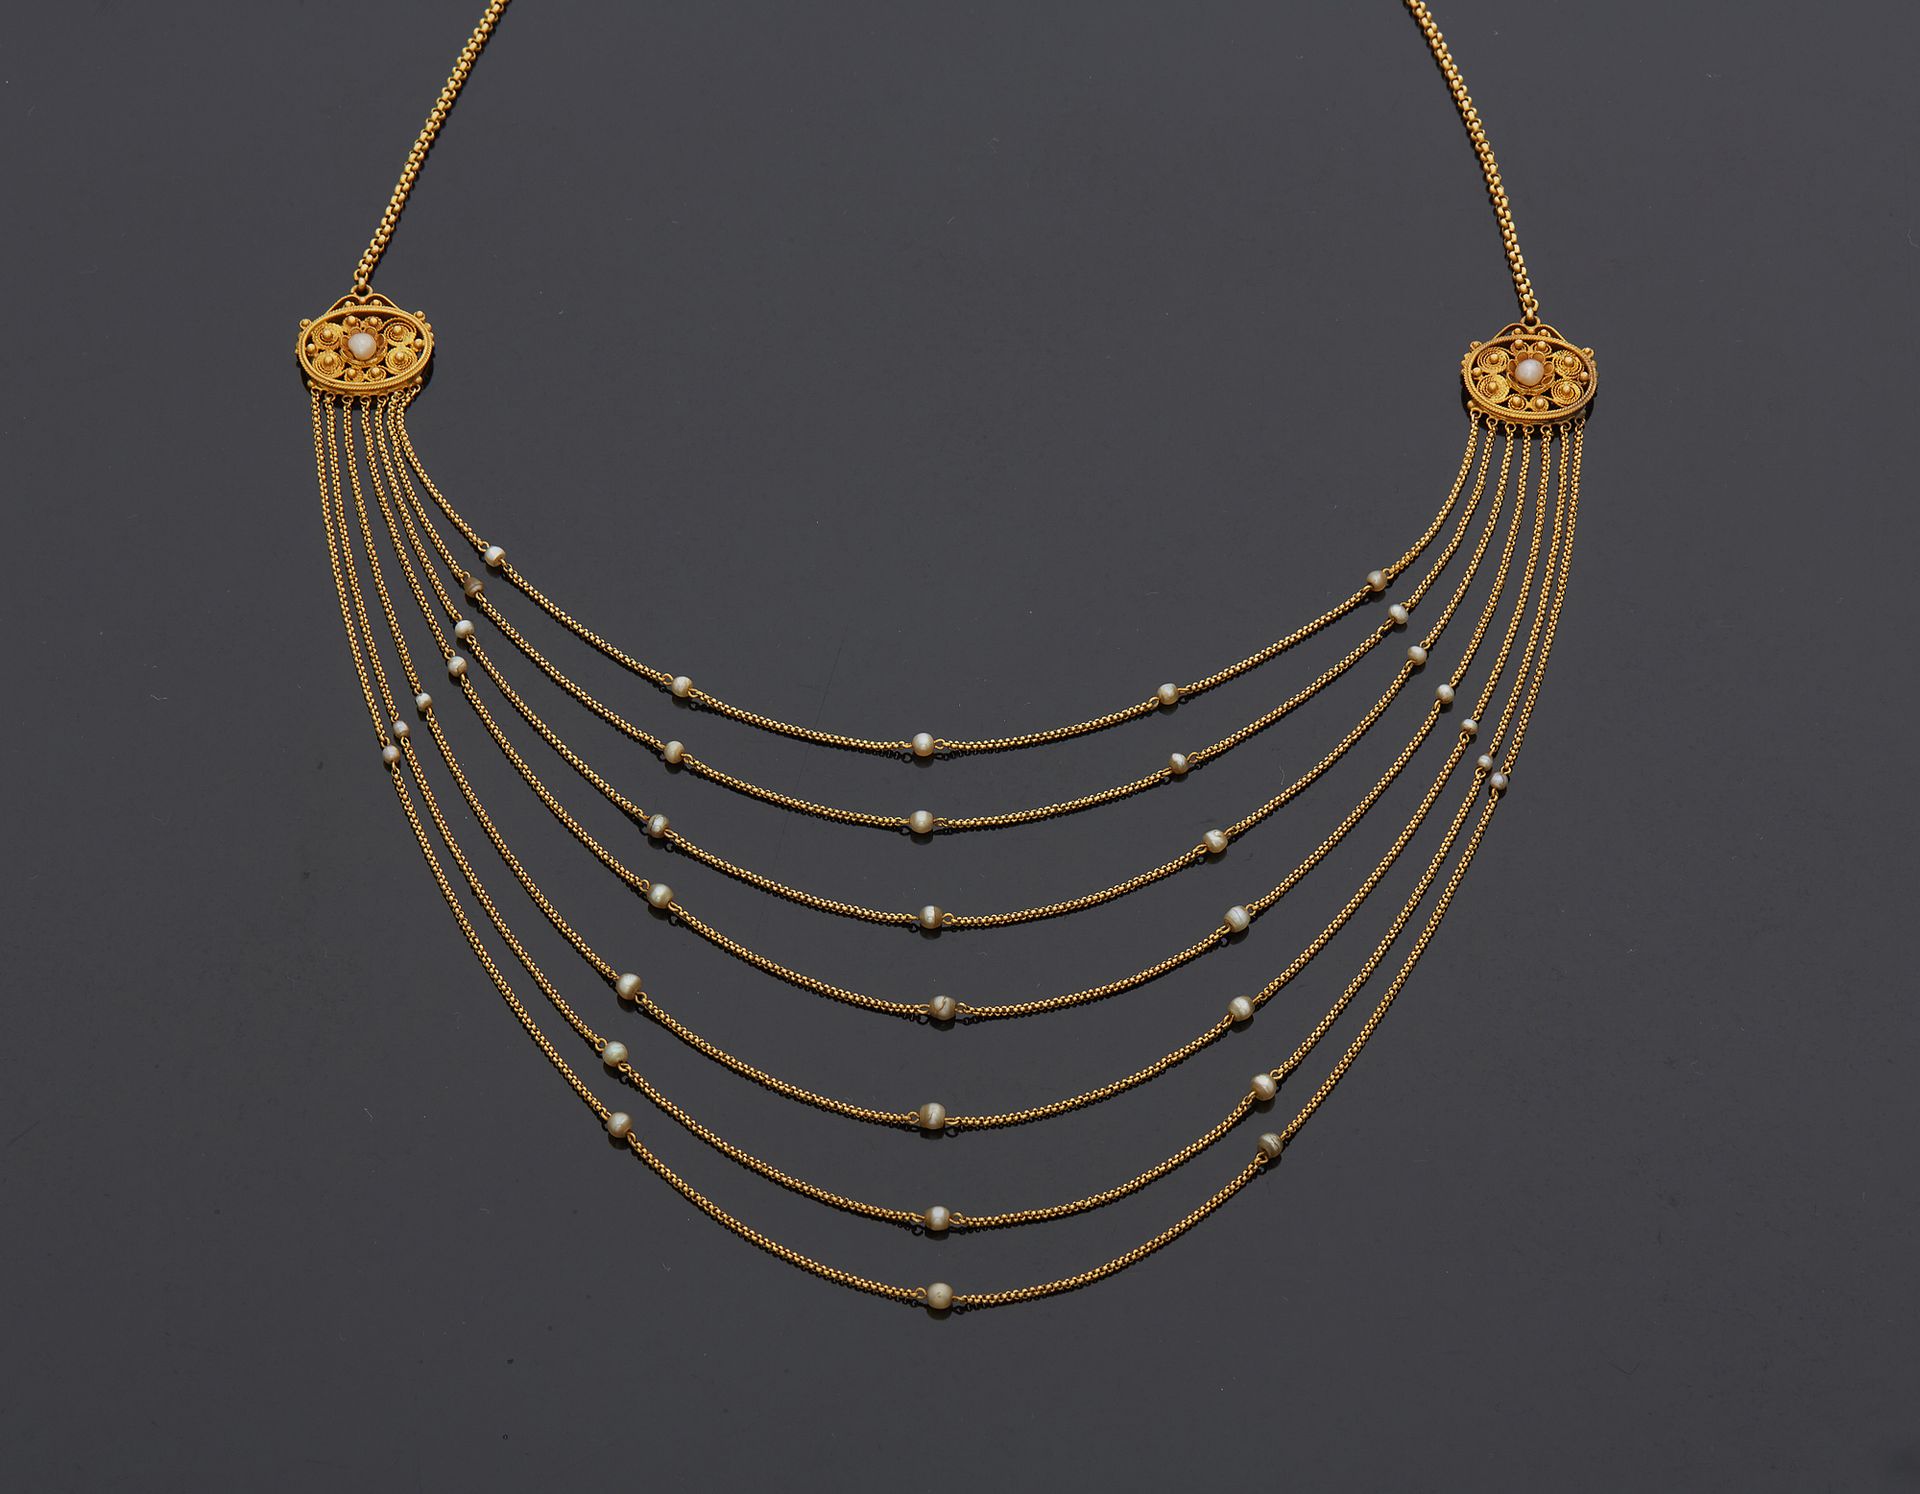 Null 750‰的18K黄金项链，由七排Jaseron网状物组成，由细珍珠组成的scandés，由丝状图案固定。棘轮扣。

长42厘米 毛重26.50克